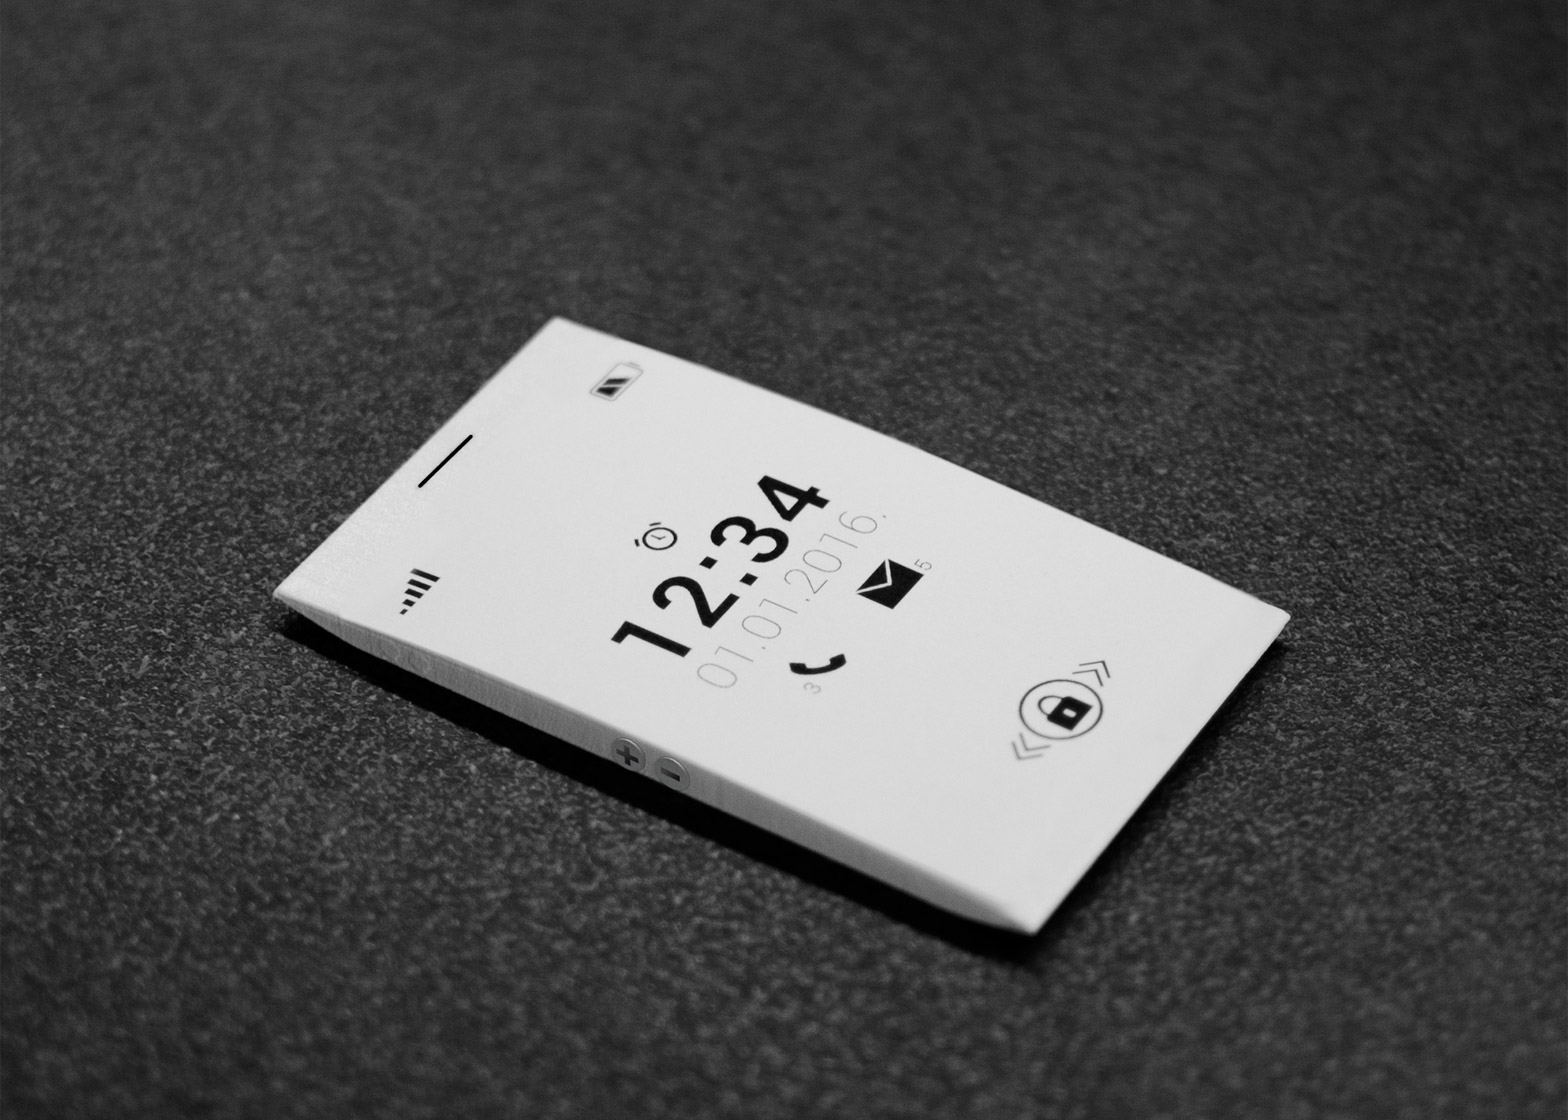 Badass e-ink O phone by Alter Ego Architects eschews apps